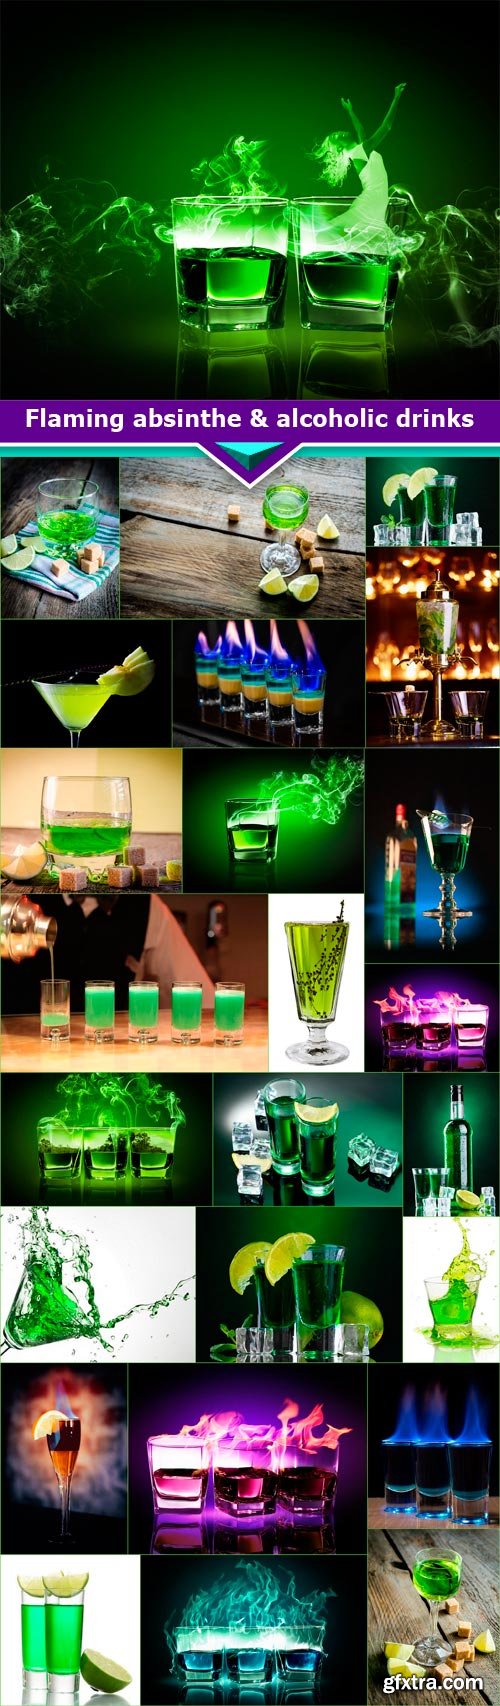 Flaming absinthe & alcoholic drinks 25x JPEG